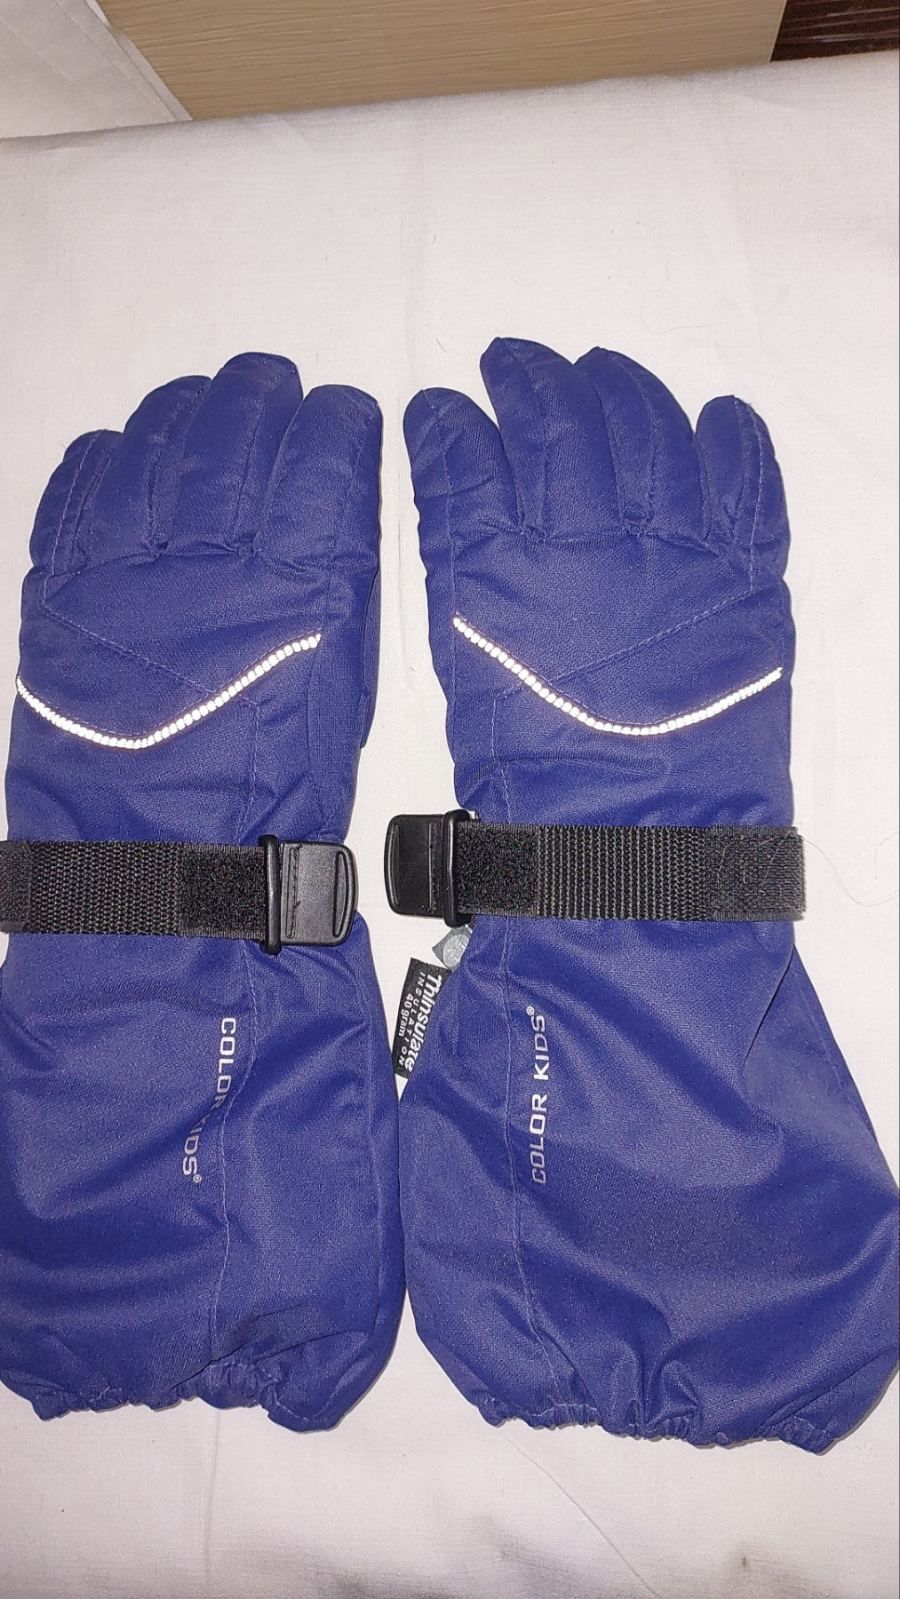 Горнолыжные перчатки Thinsulate,10-12 размер